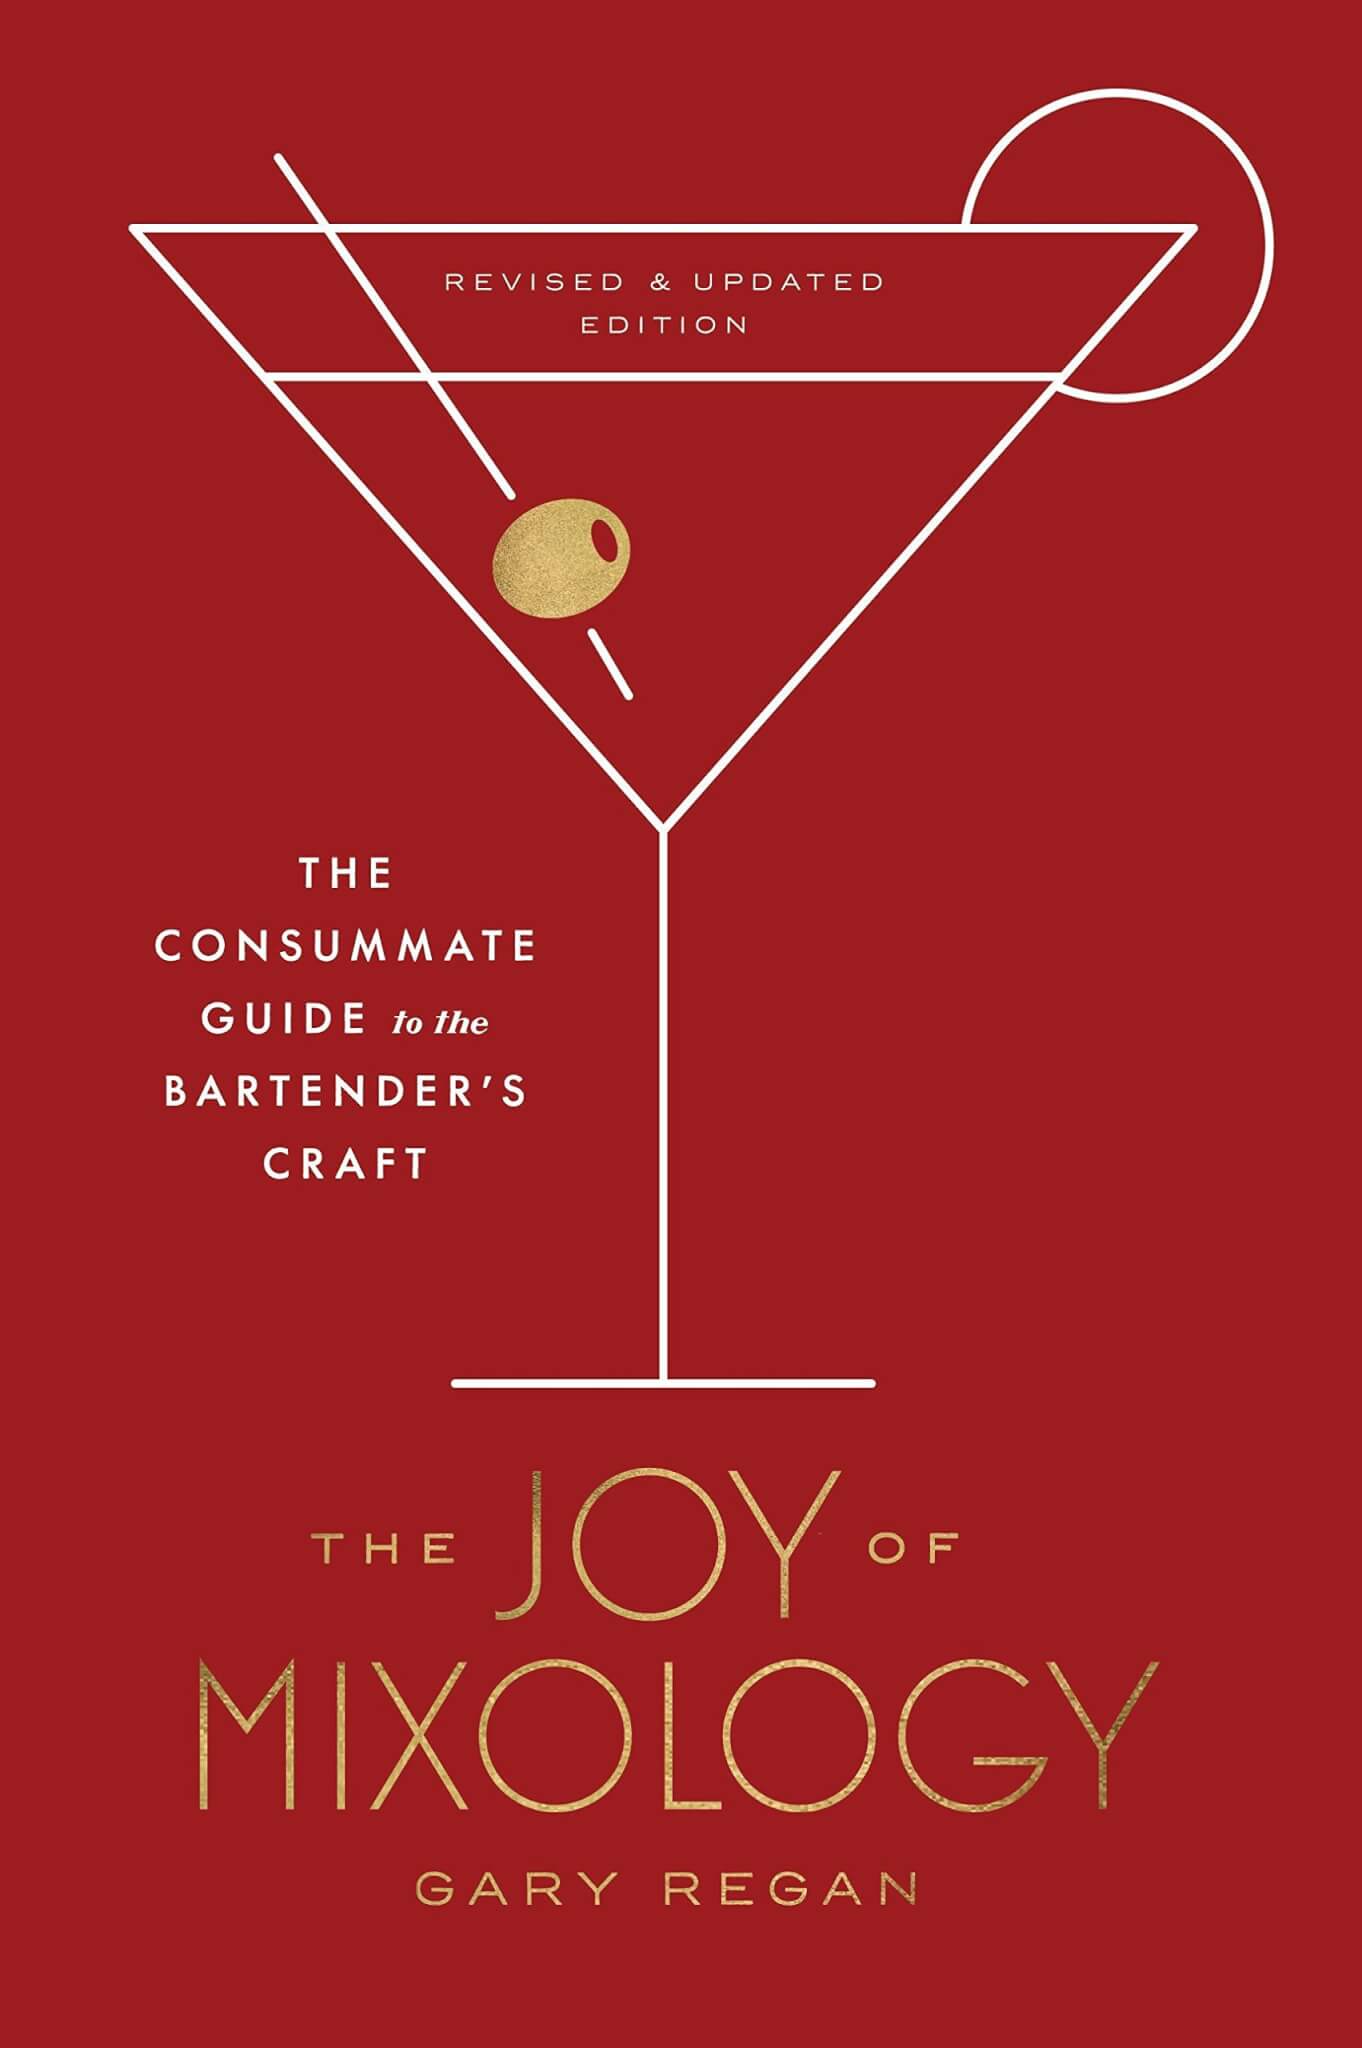 "The Joy of Mixology" by Gary Regan